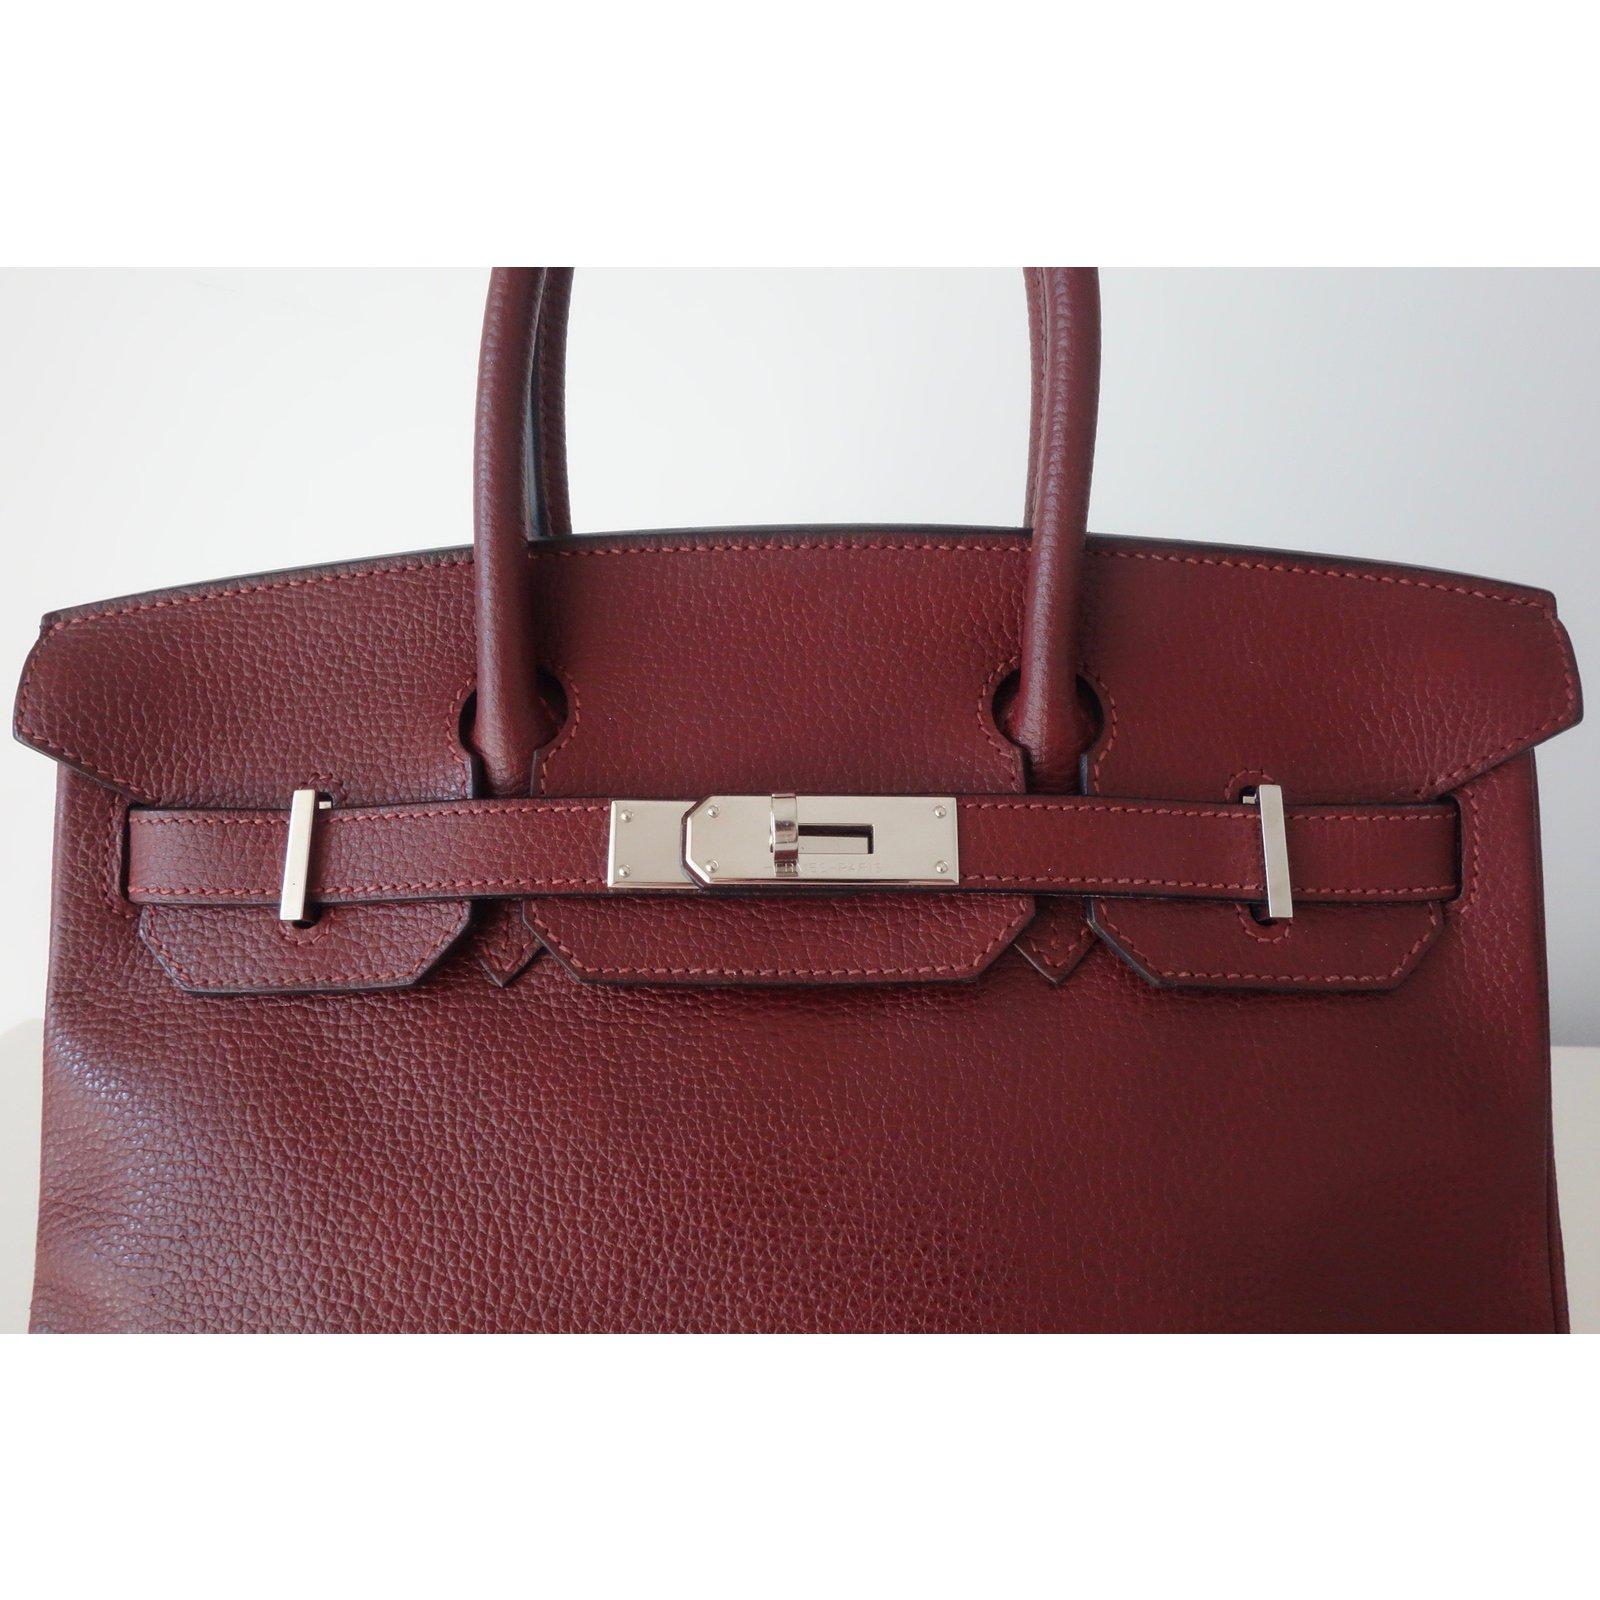 Hermès Taurillon Clemence Leather Bordeaux Burgundy Phw 30 cm Birkin Bag   5